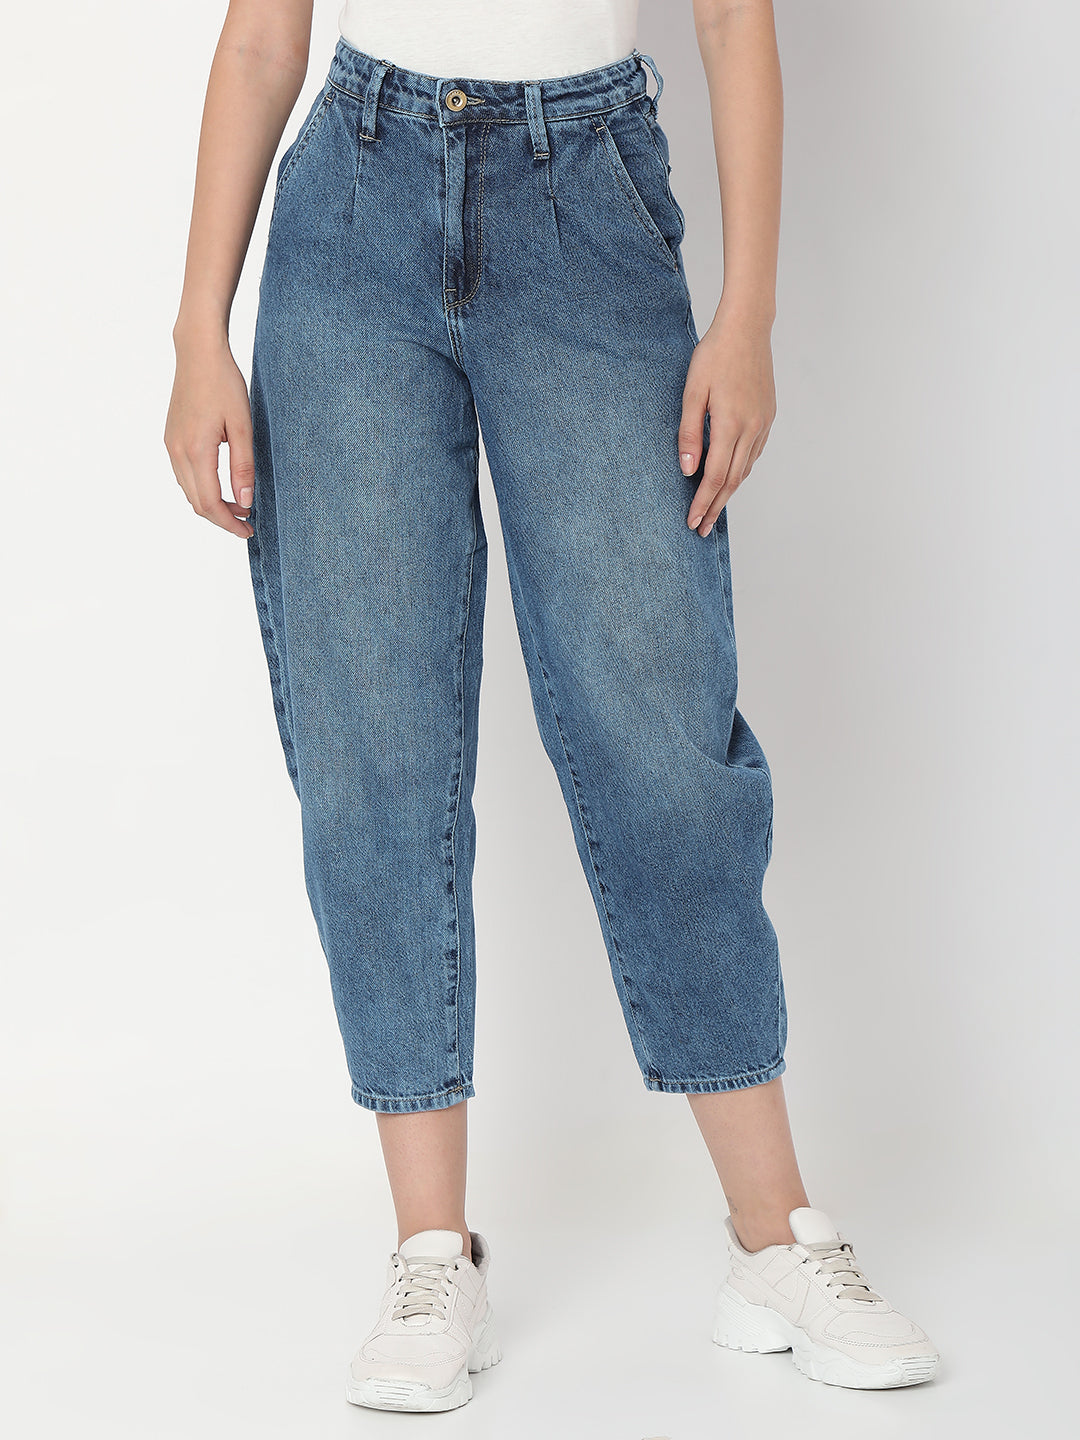 Spykar Mid Blue Cotton Baggy Fit Crop Length Jeans For Women (Clara)